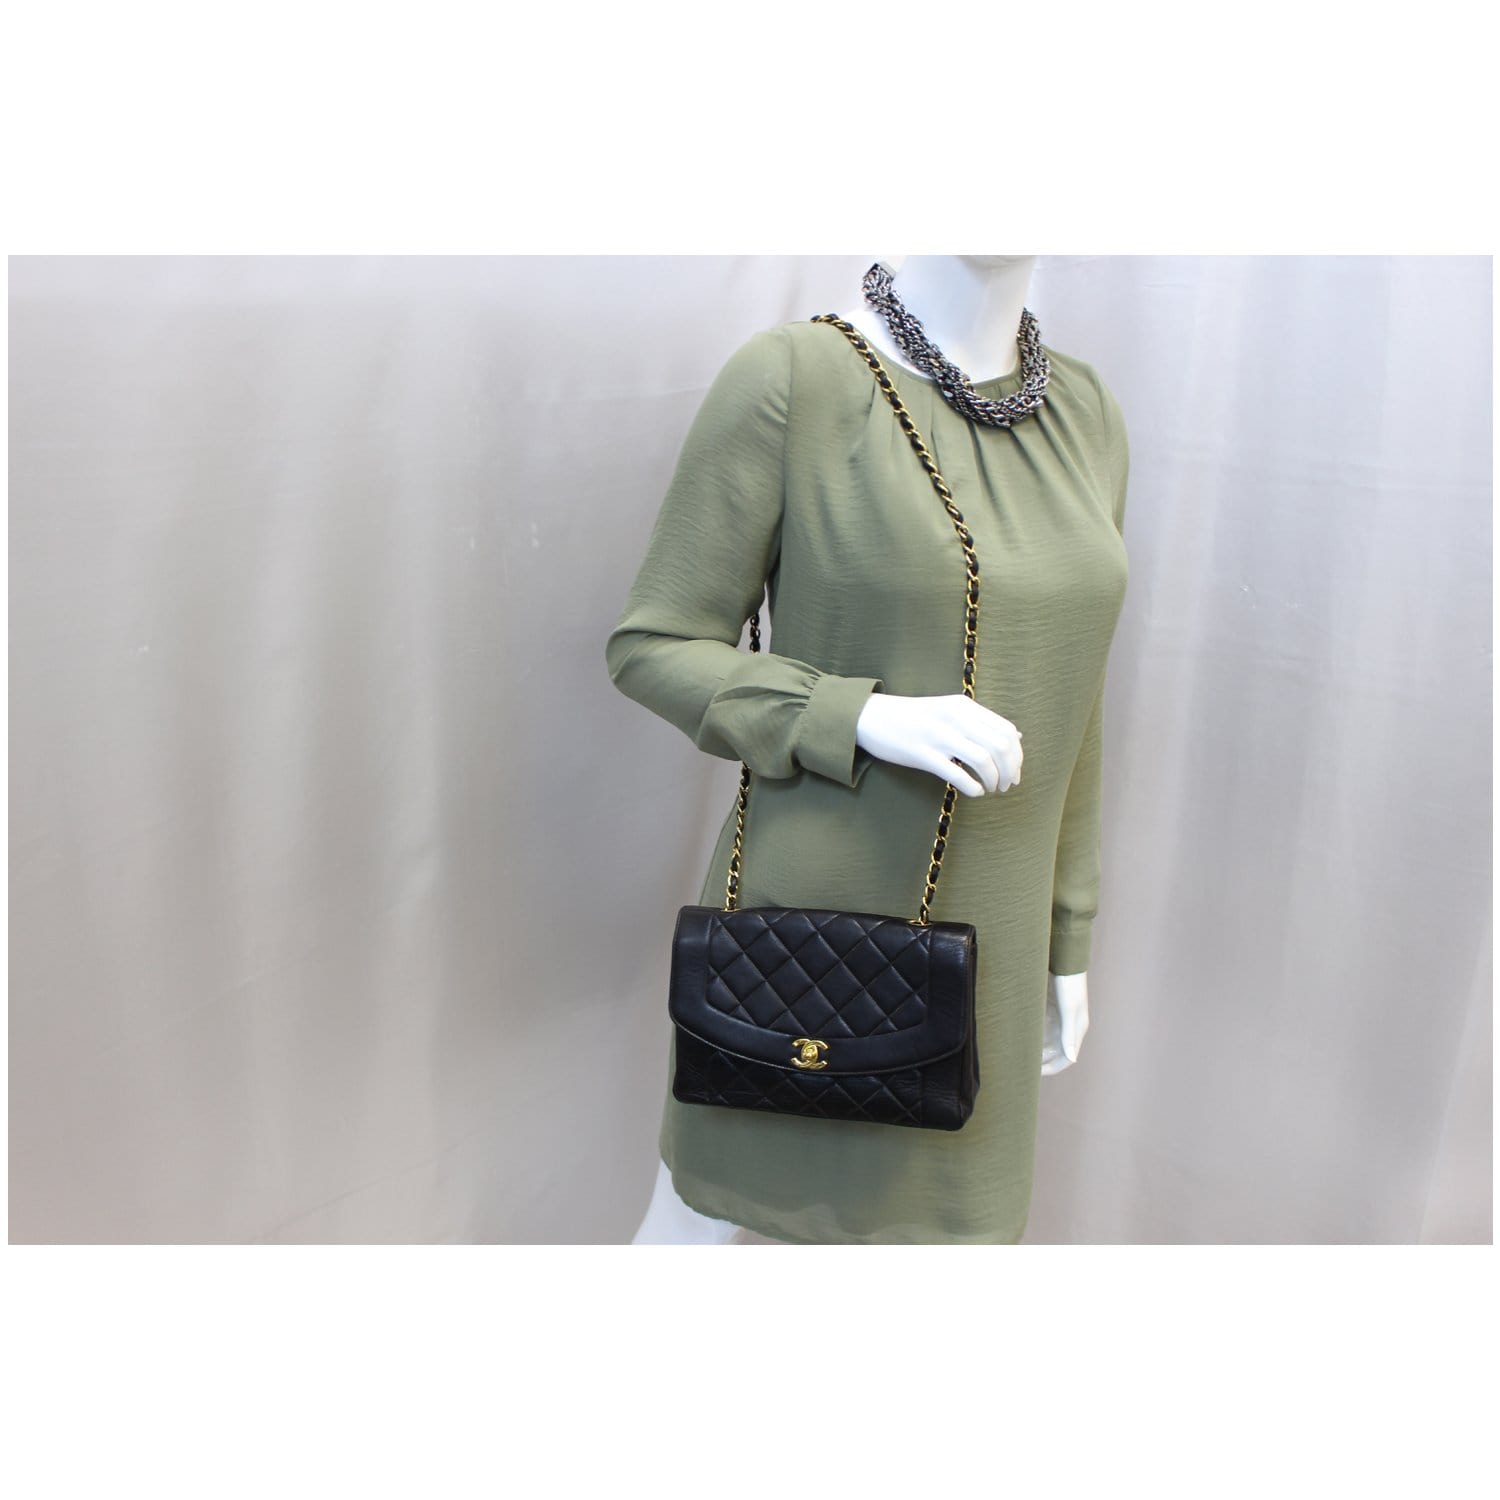 Black Chanel Diana Flap Lambskin Leather Crossbody Bag – Designer Revival